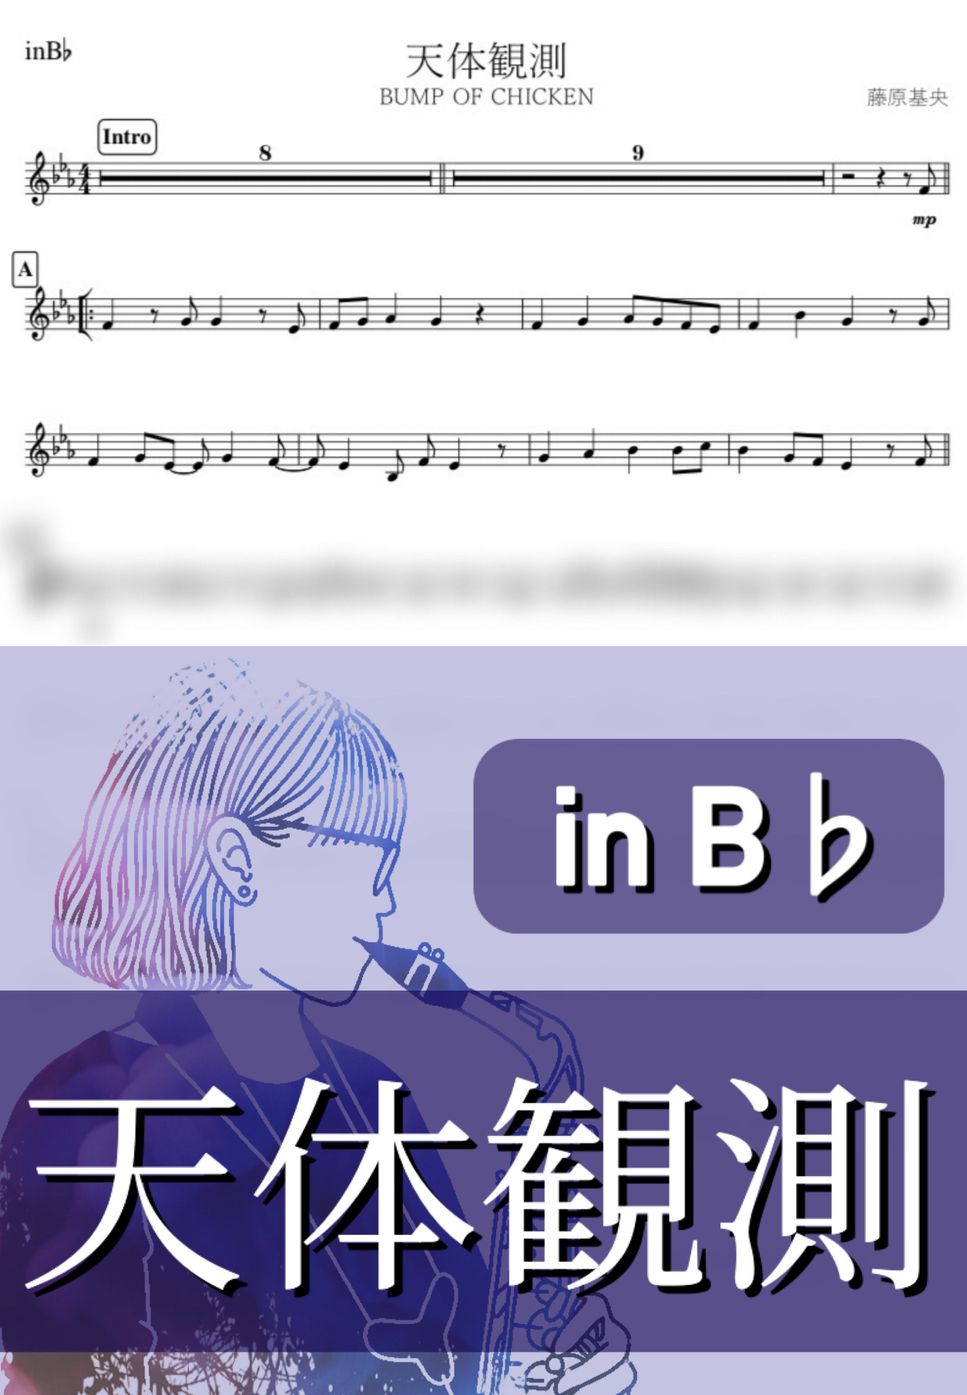 BUMP OF CHICKEN - 天体観測 (B♭) by kanamusic